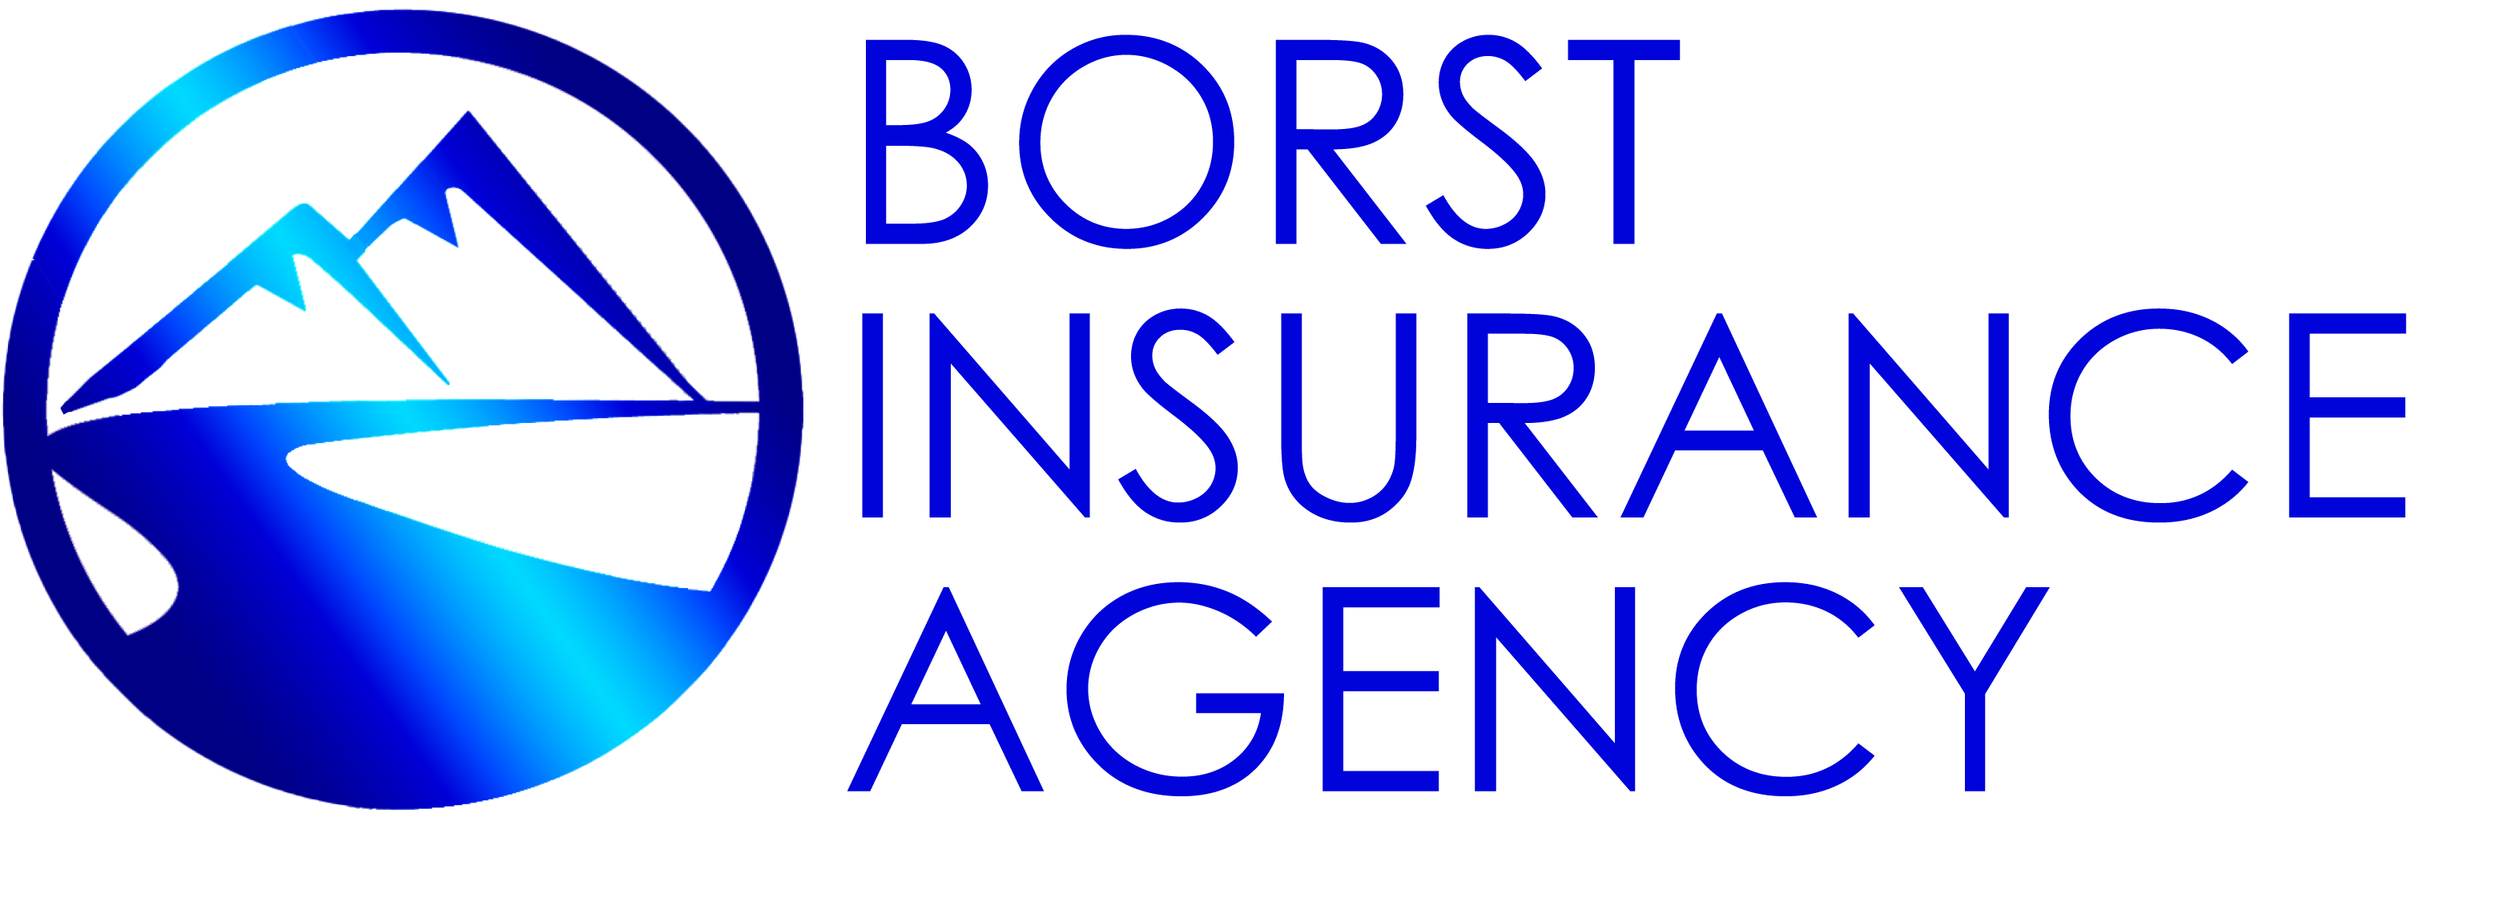 Borst Logo.png